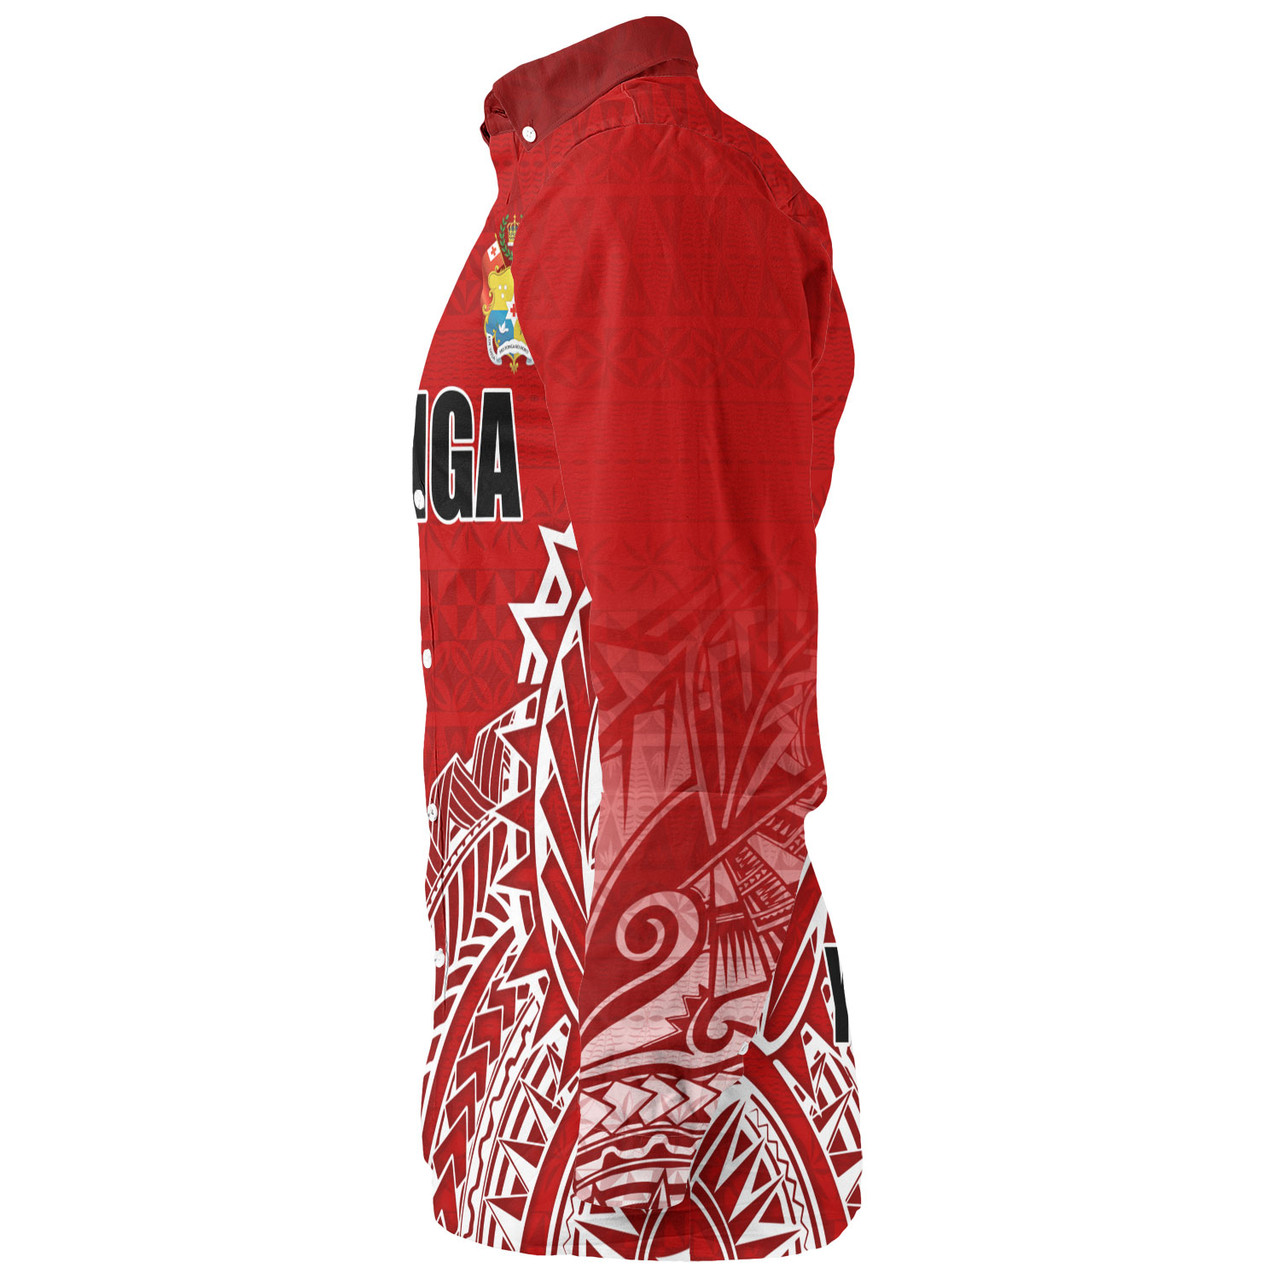 Tonga Custom Personalised Long Sleeve Shirt Seal With Flag Style